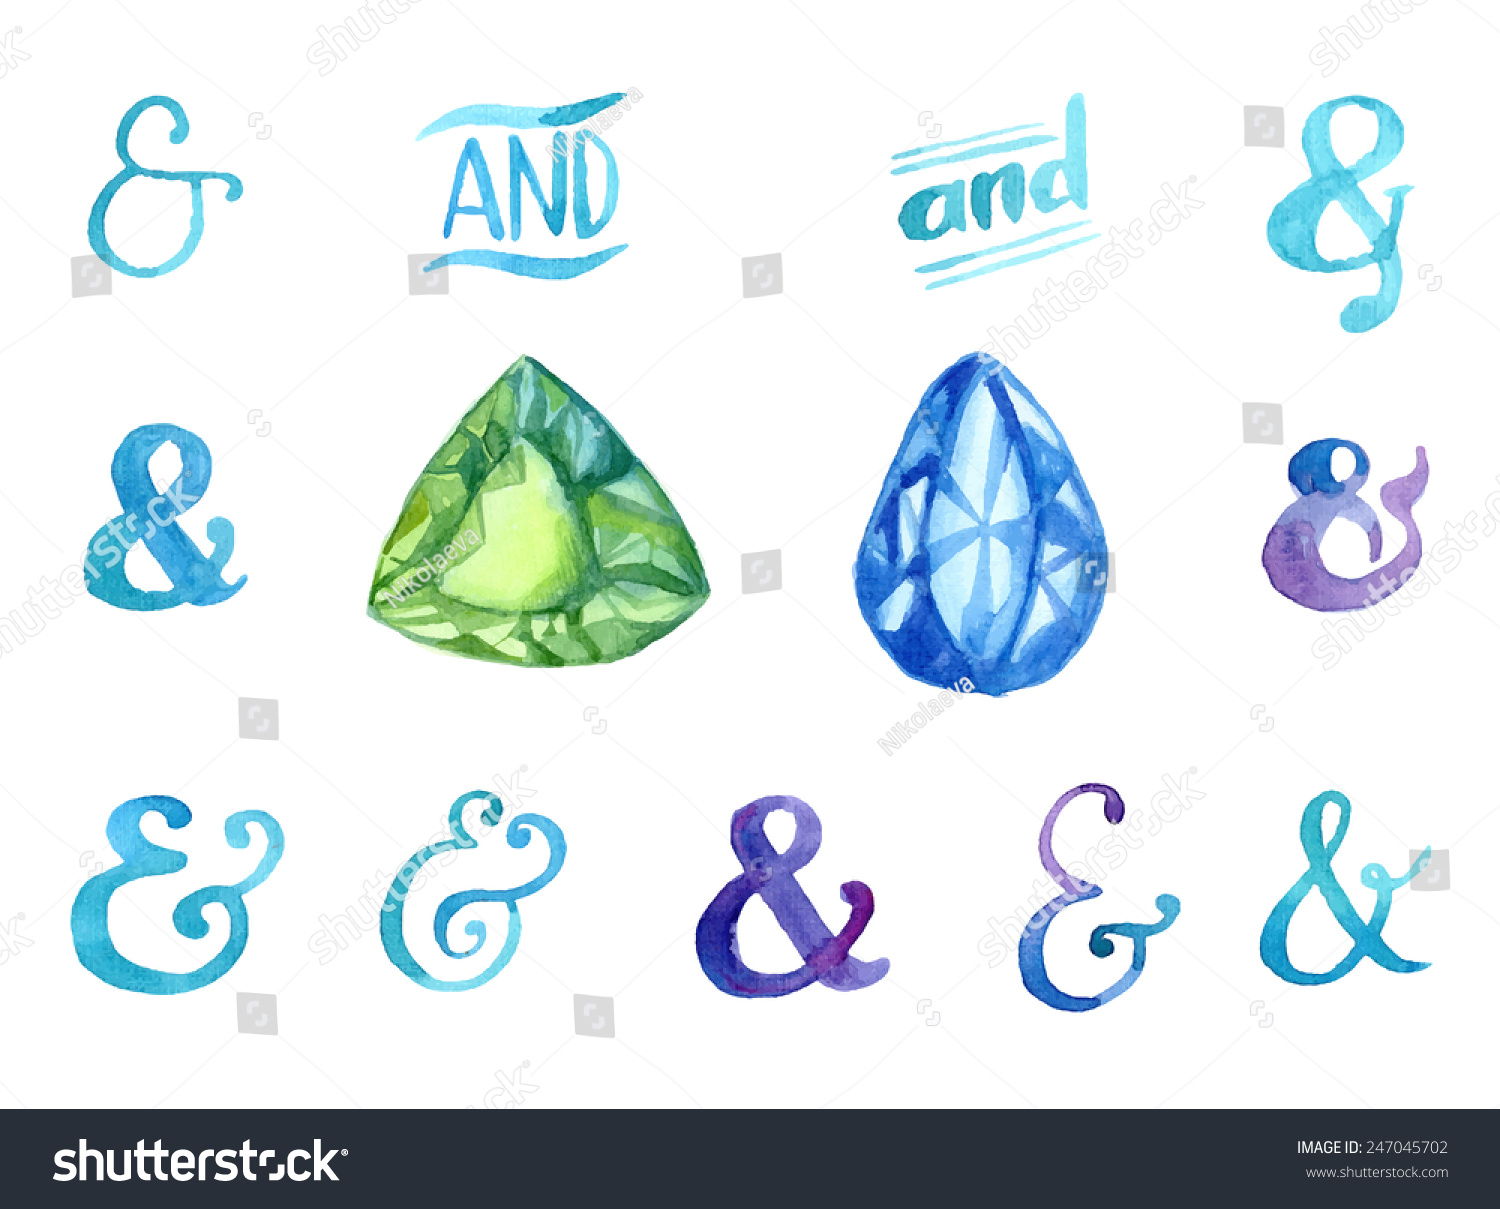 SVG of Hand drawn watercolor ampersands and gemstones set for your design svg